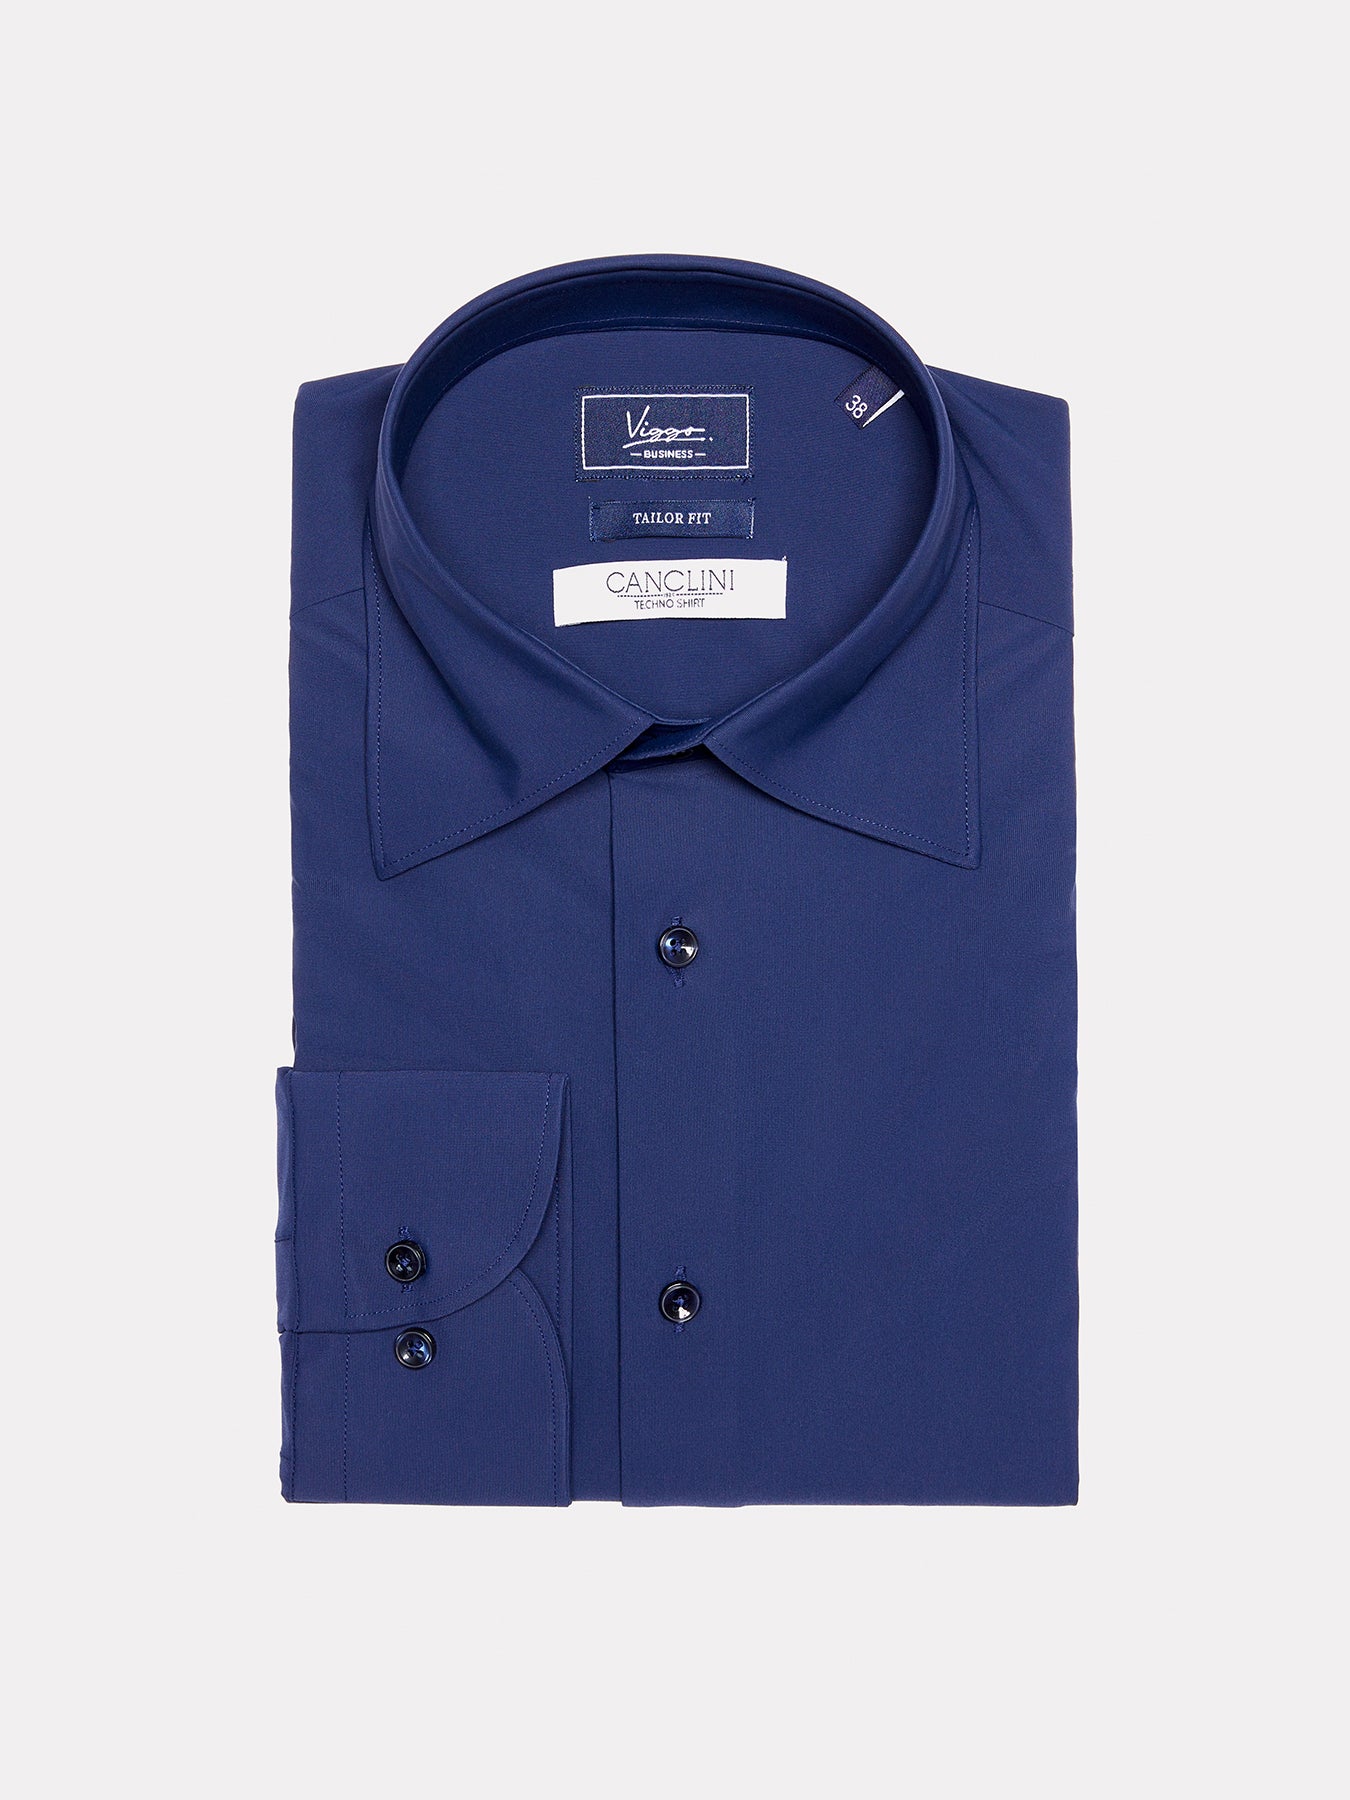 Navy blue techno fabric shirt